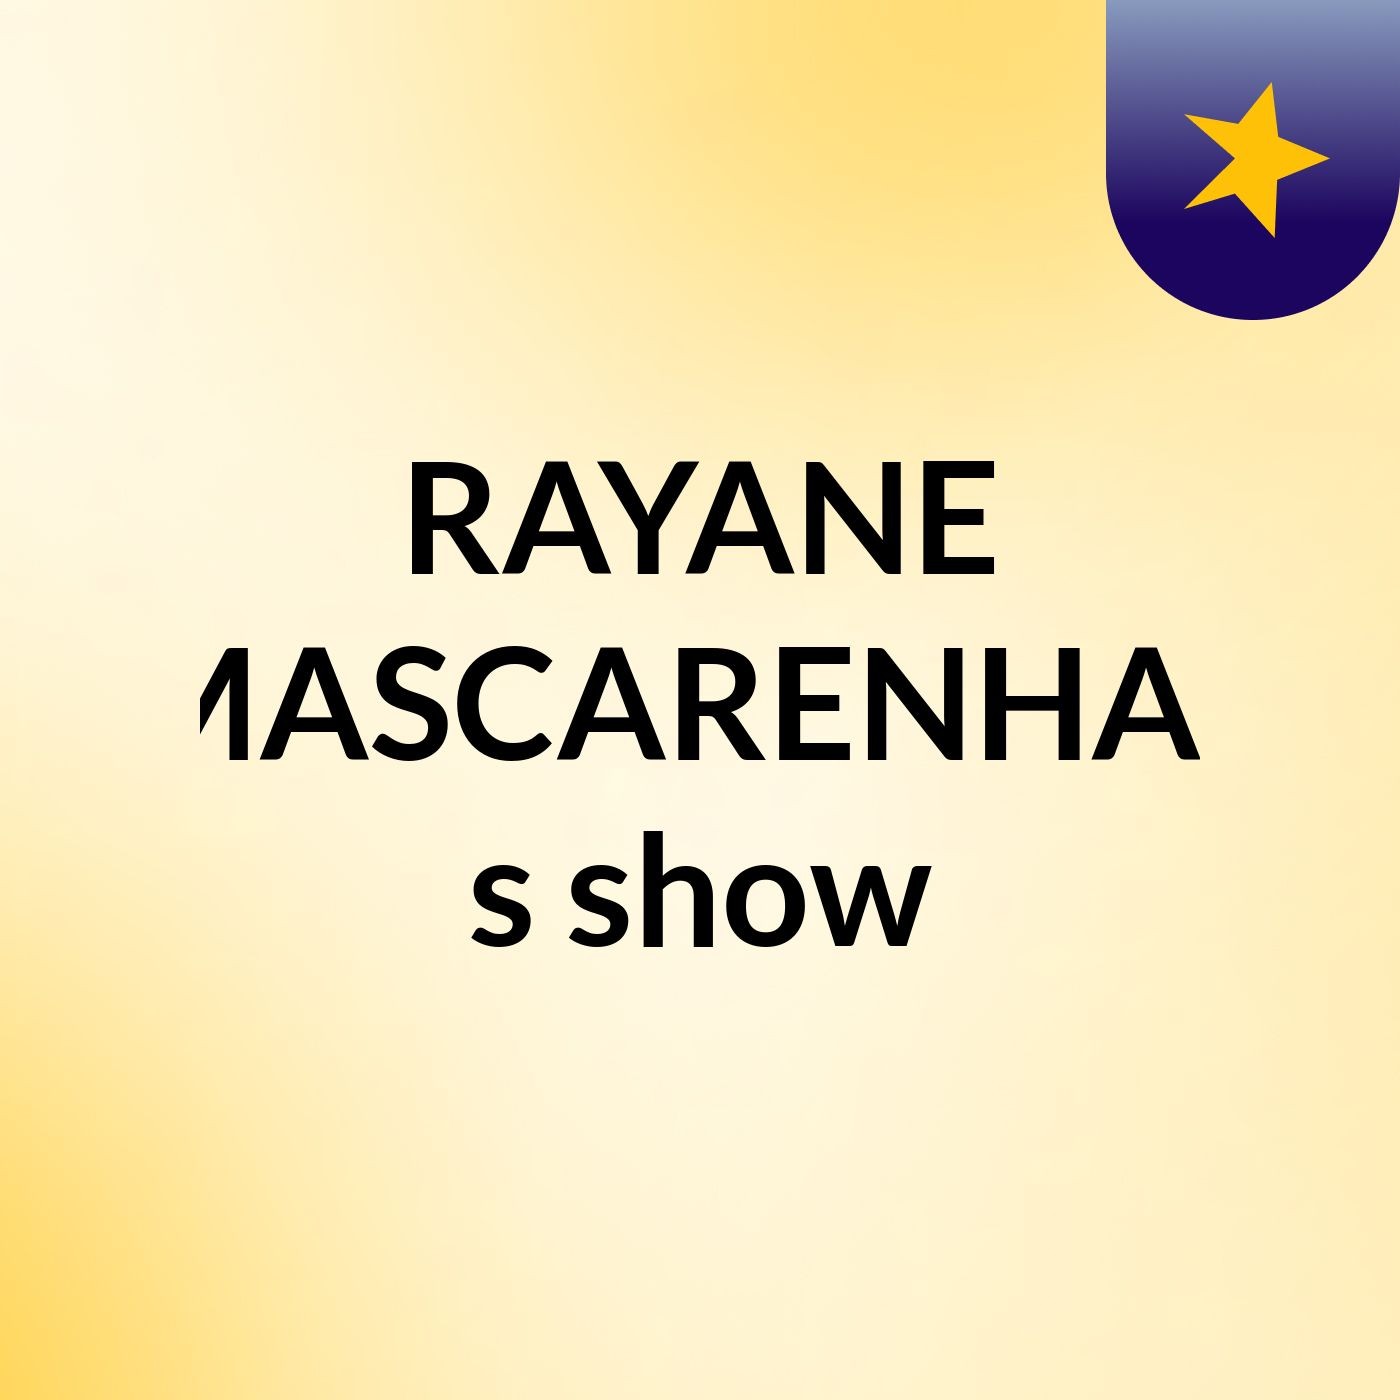 RAYANE MASCARENHAS's show